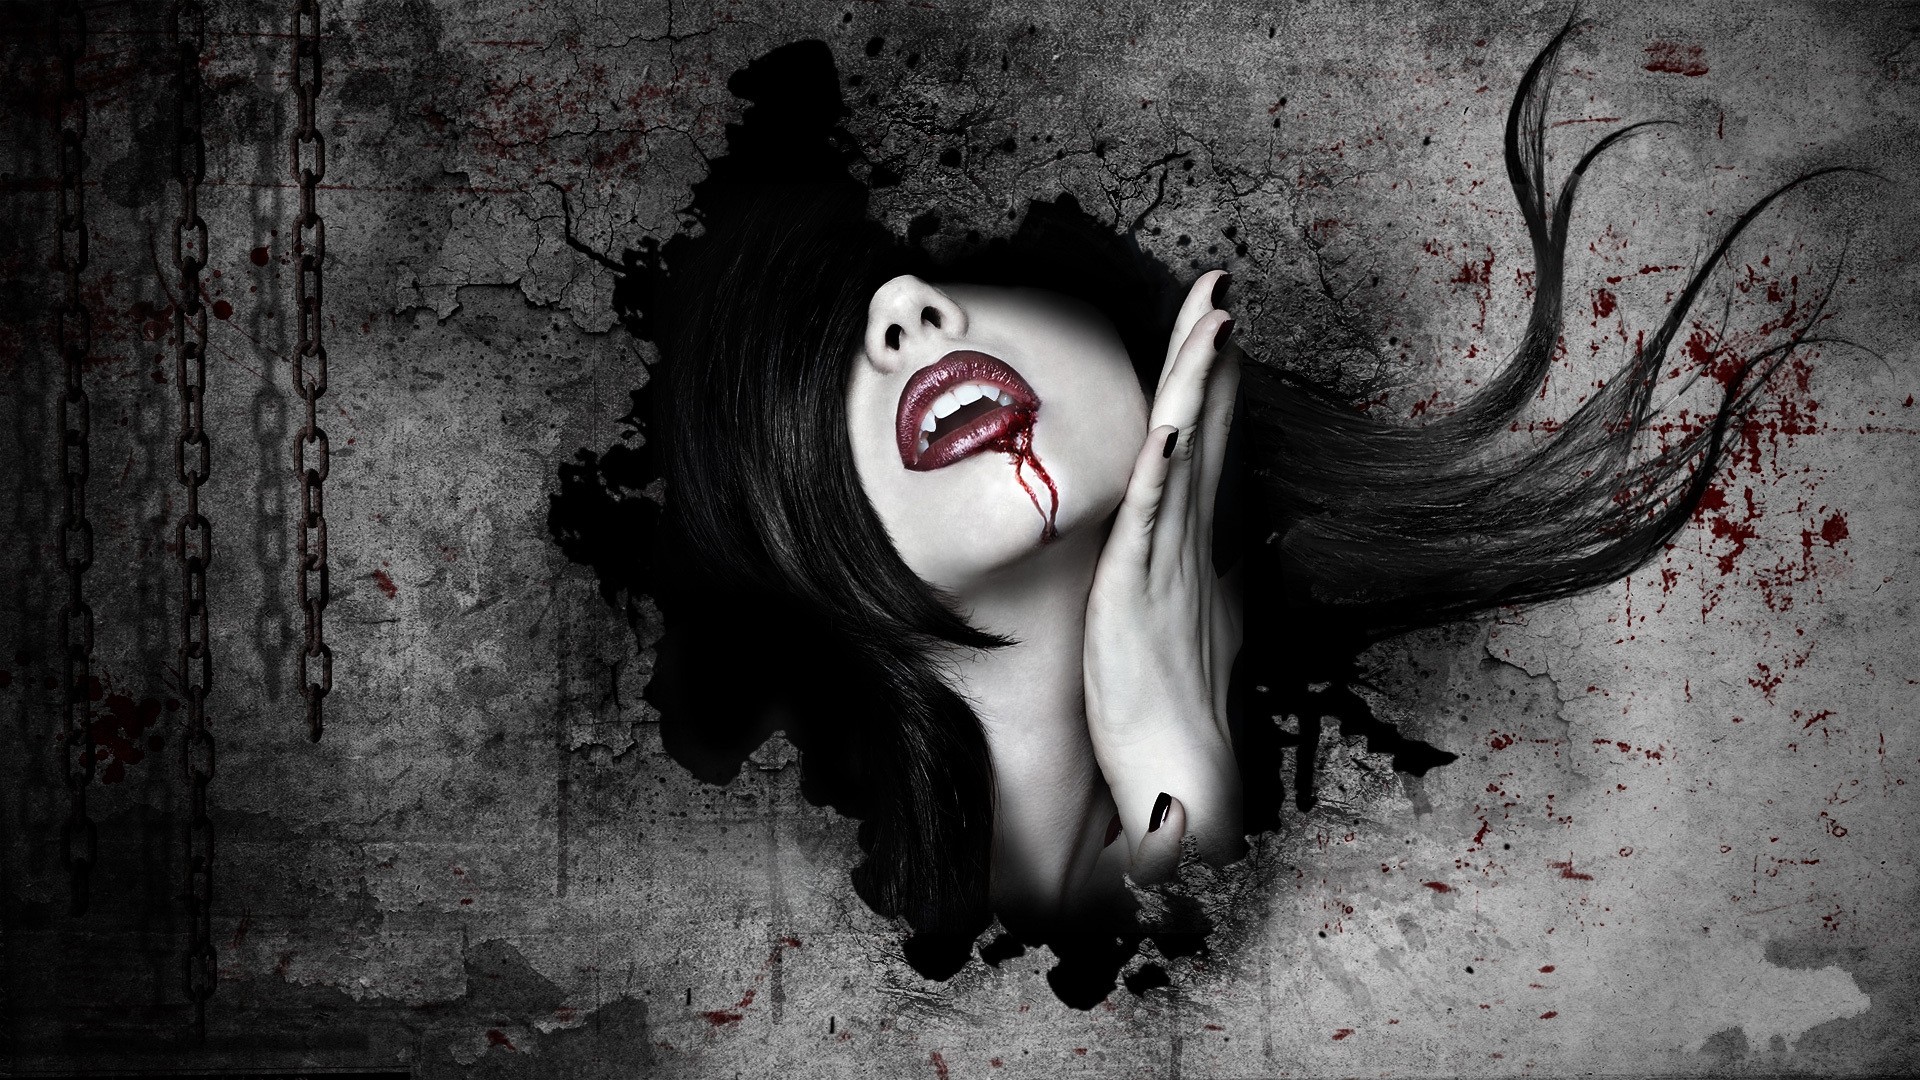 dark horror fantasy art gothic women vampires blood face wallpaper